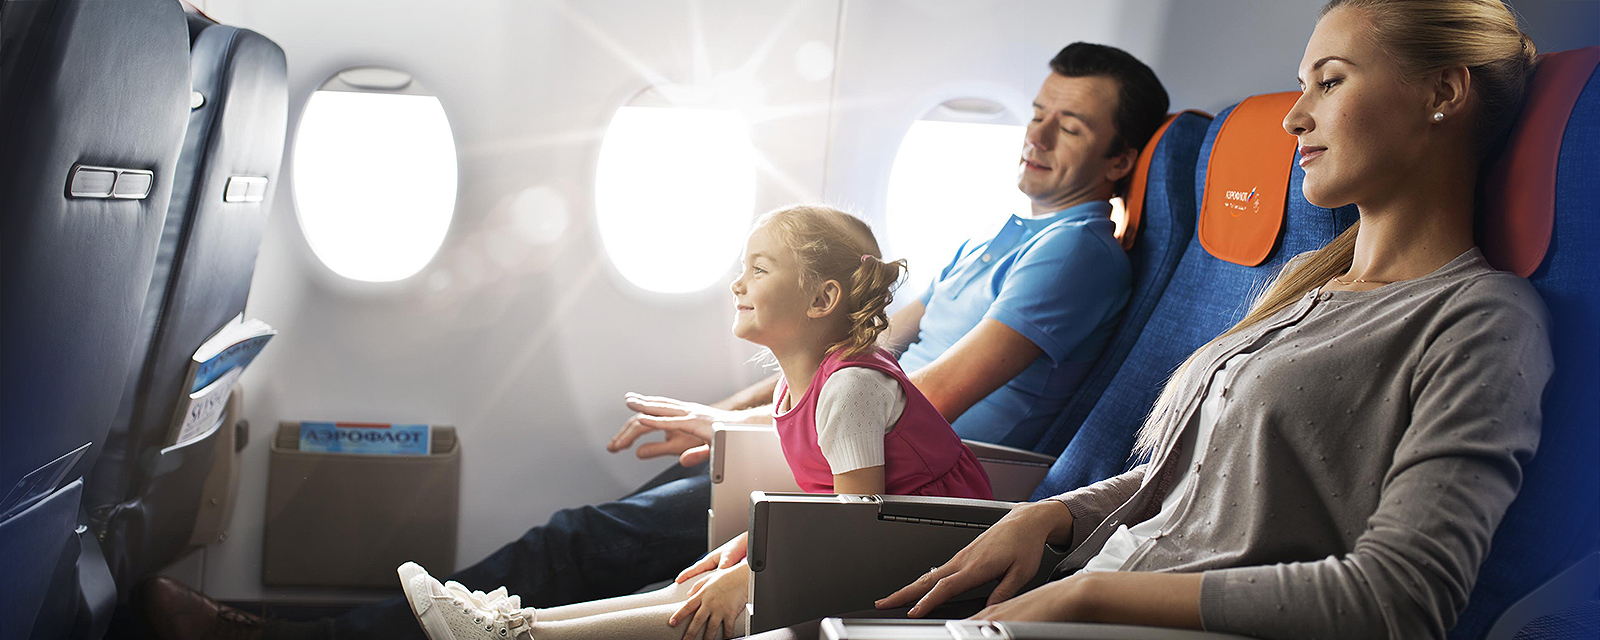 Ребенок без сопровождения в самолете. Путешествие на самолете. Самолет для детей. Семья в самолете. Путешествие с семьей на самолете.